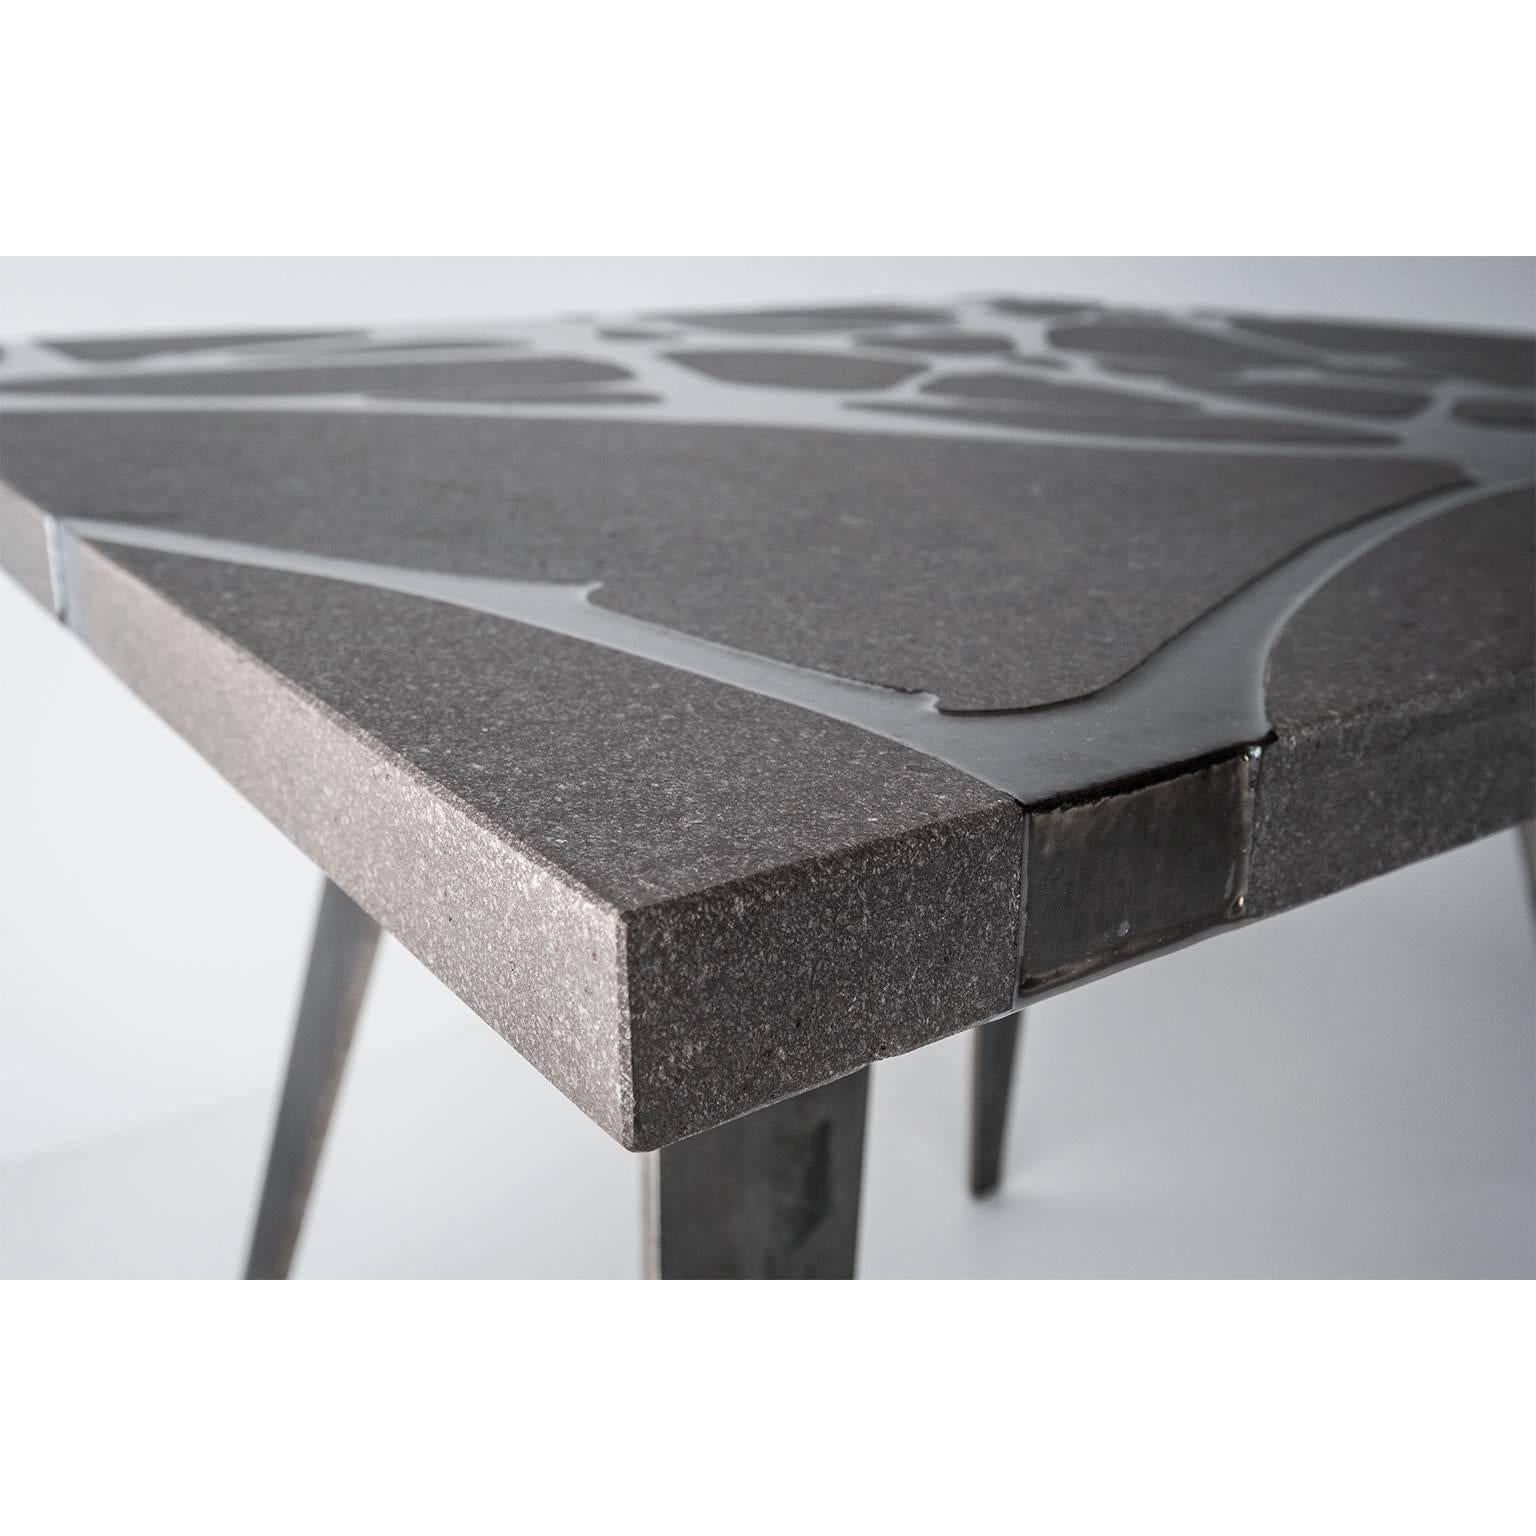 Contemporary Outdoor Table in Lava Stone and Steel, Venturae v3, Filodifumo In New Condition For Sale In Palermo, IT